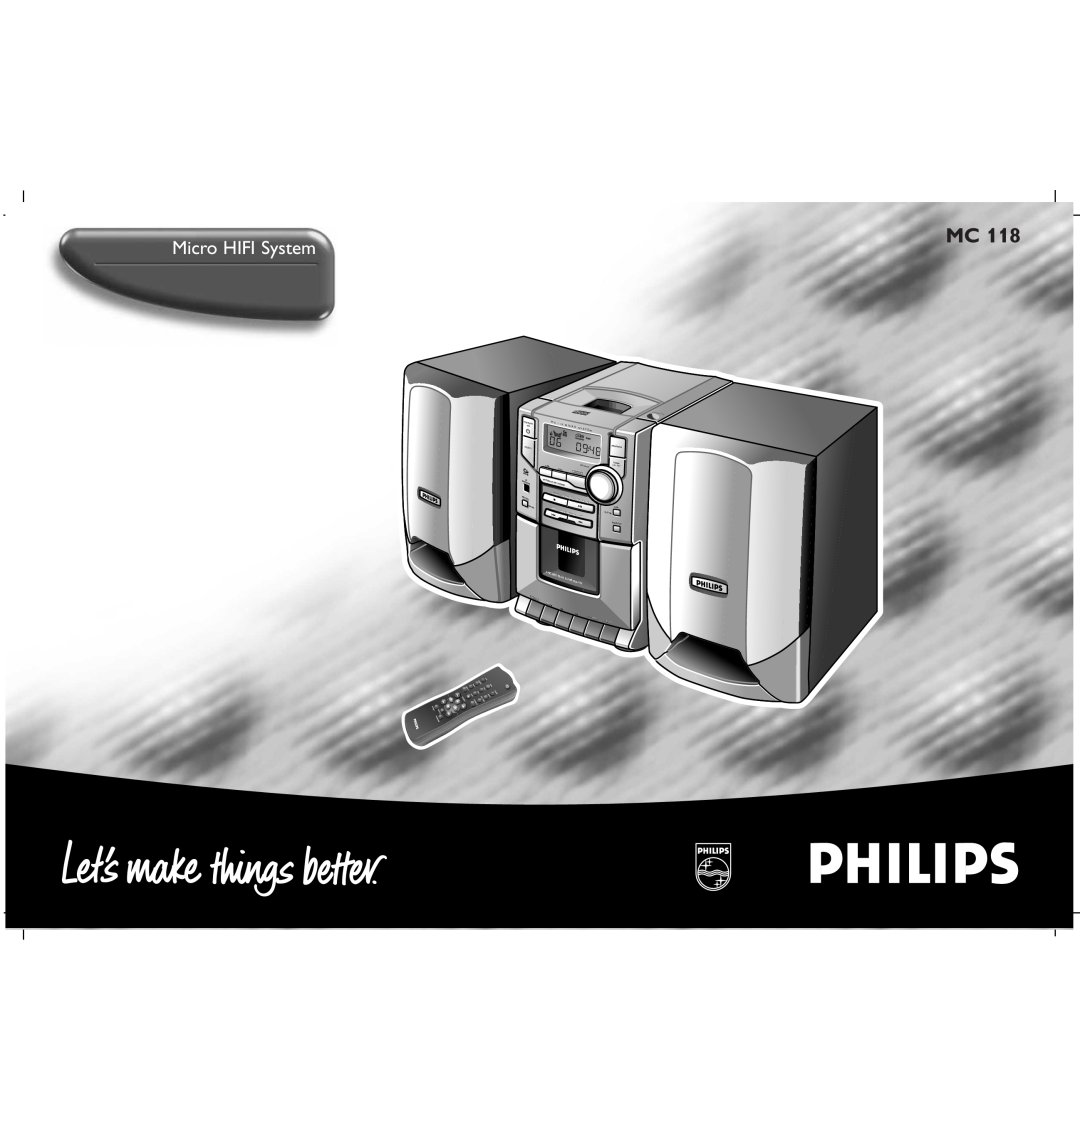 Philips MC118 manual Micro HIFI System, Incrediblei, Surround, Standby, S T E M, Timer, Program, Select, Volume, Sound 